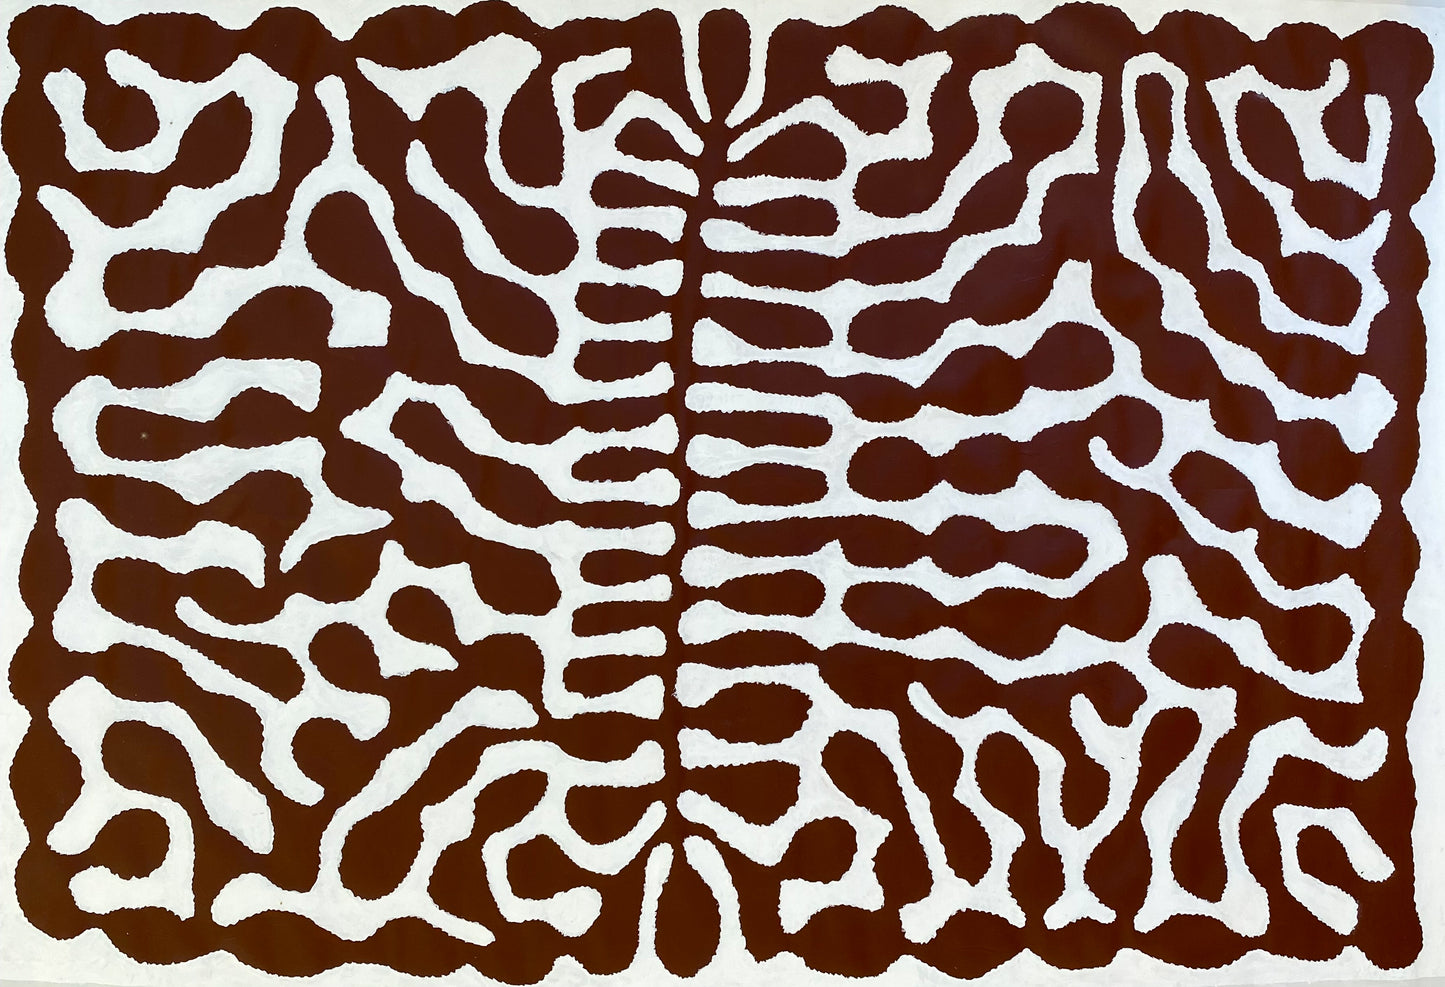 Mitjili Naparrula Watiya Tjuta Indigenous Art Aboriginal Art Australian Art Contemporary Art White Brown Large Painting 